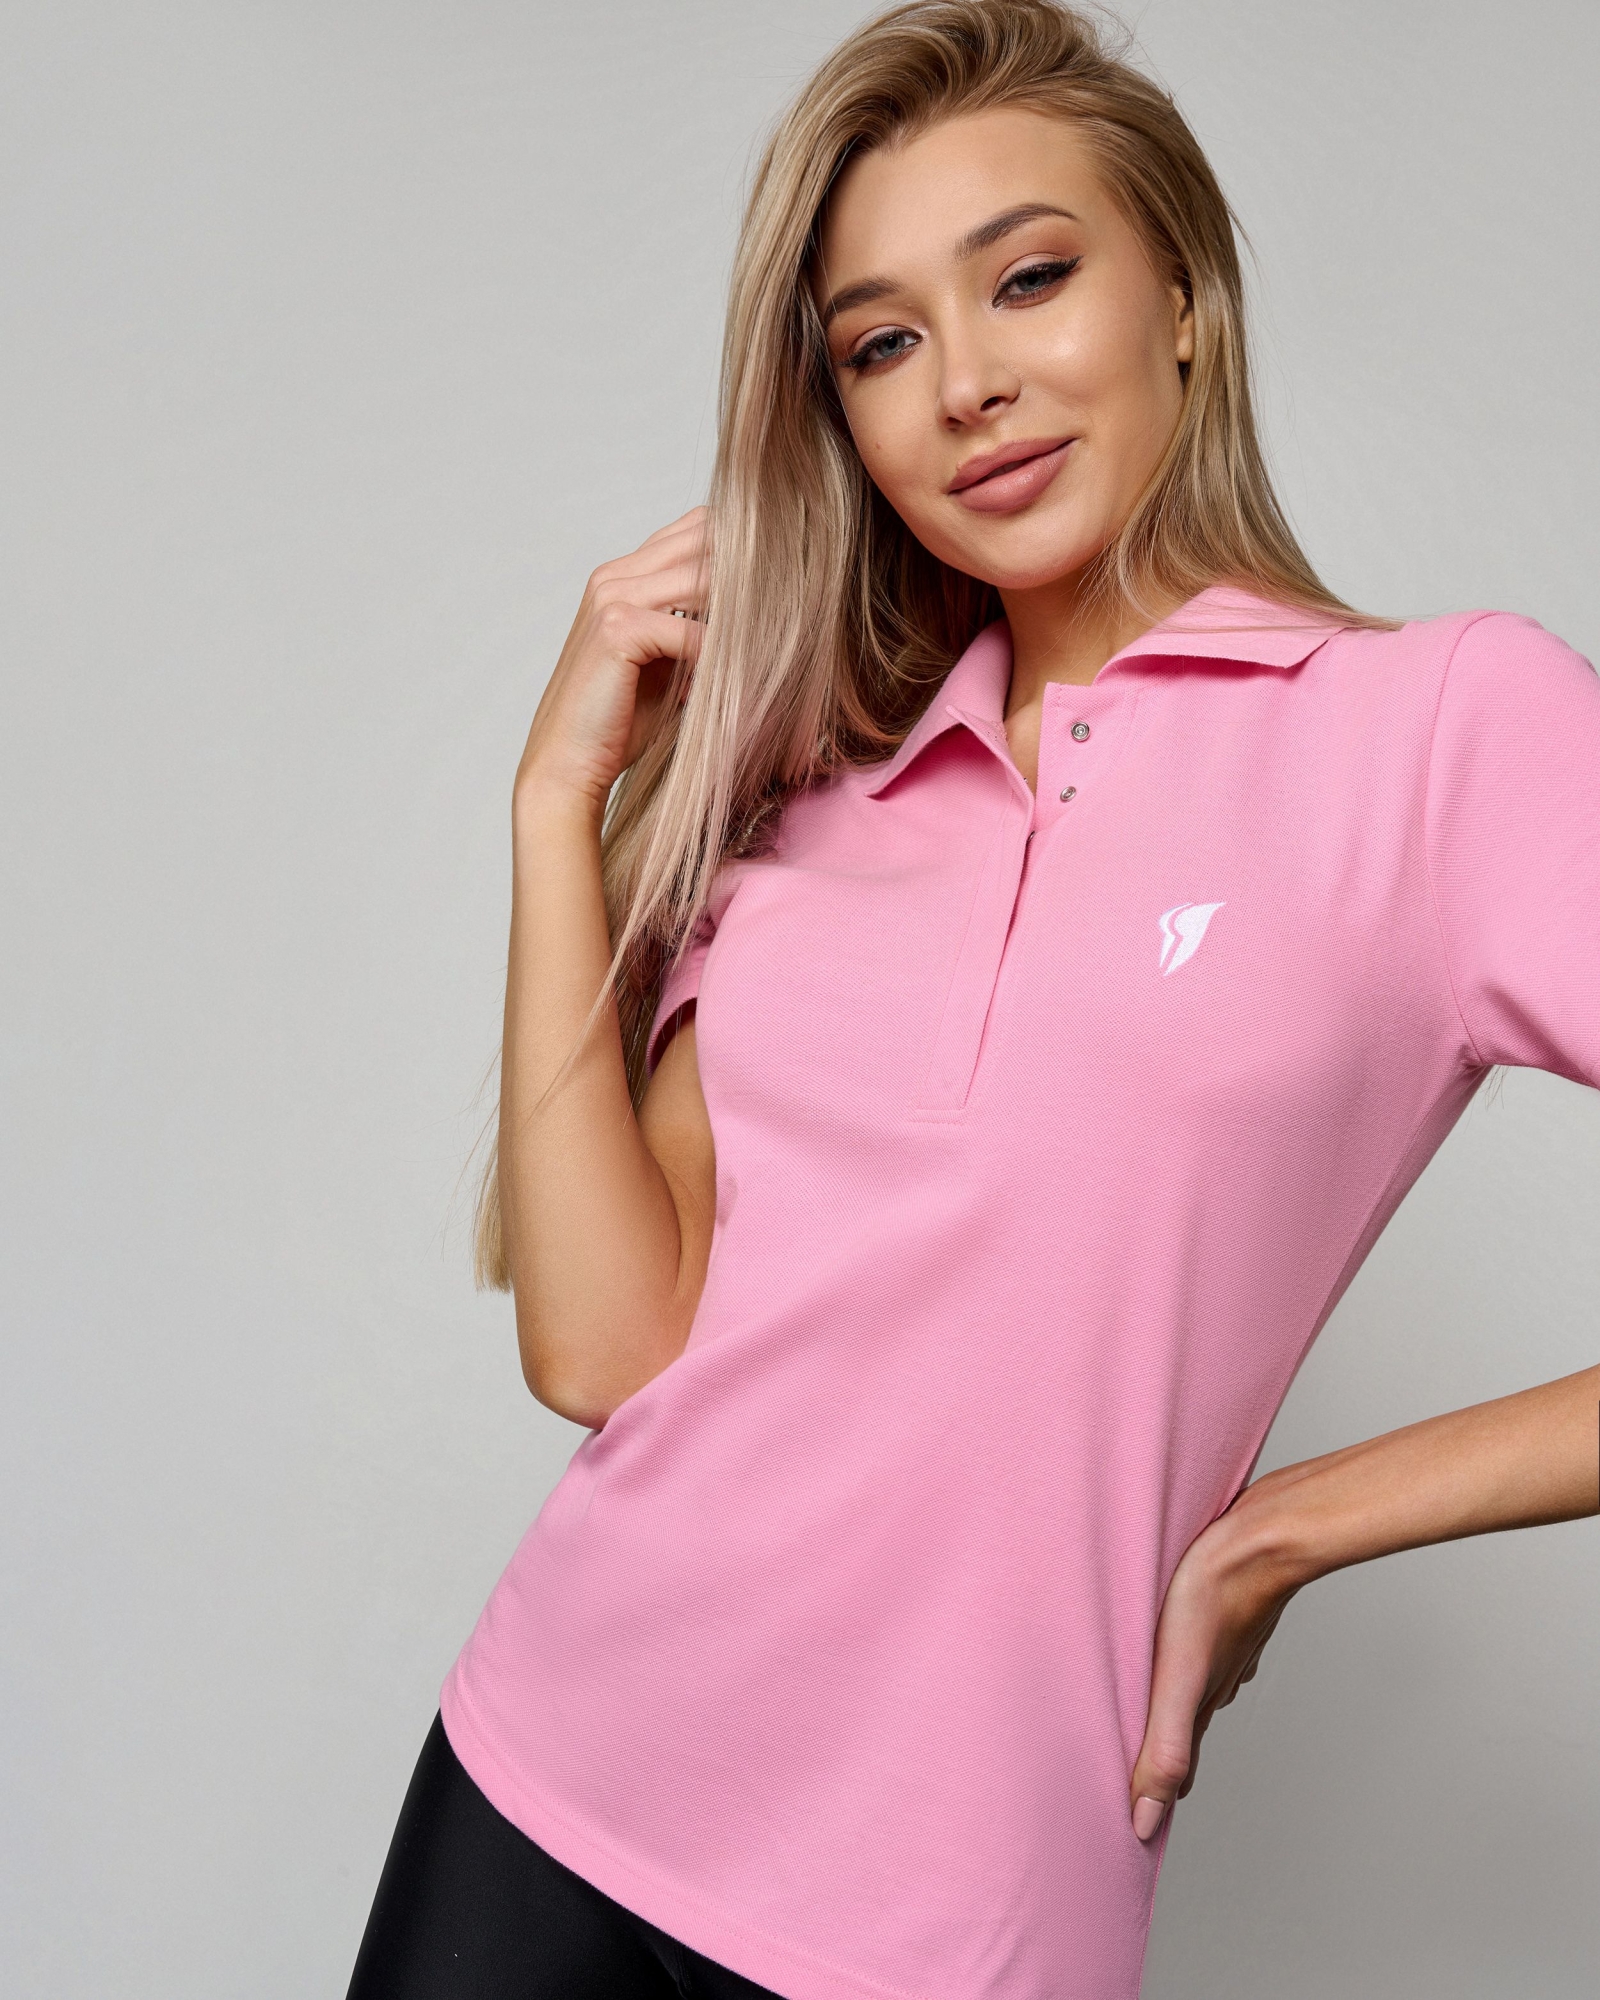 Bona Fide: T-Shirt Polo "Baby Pink" фото 5